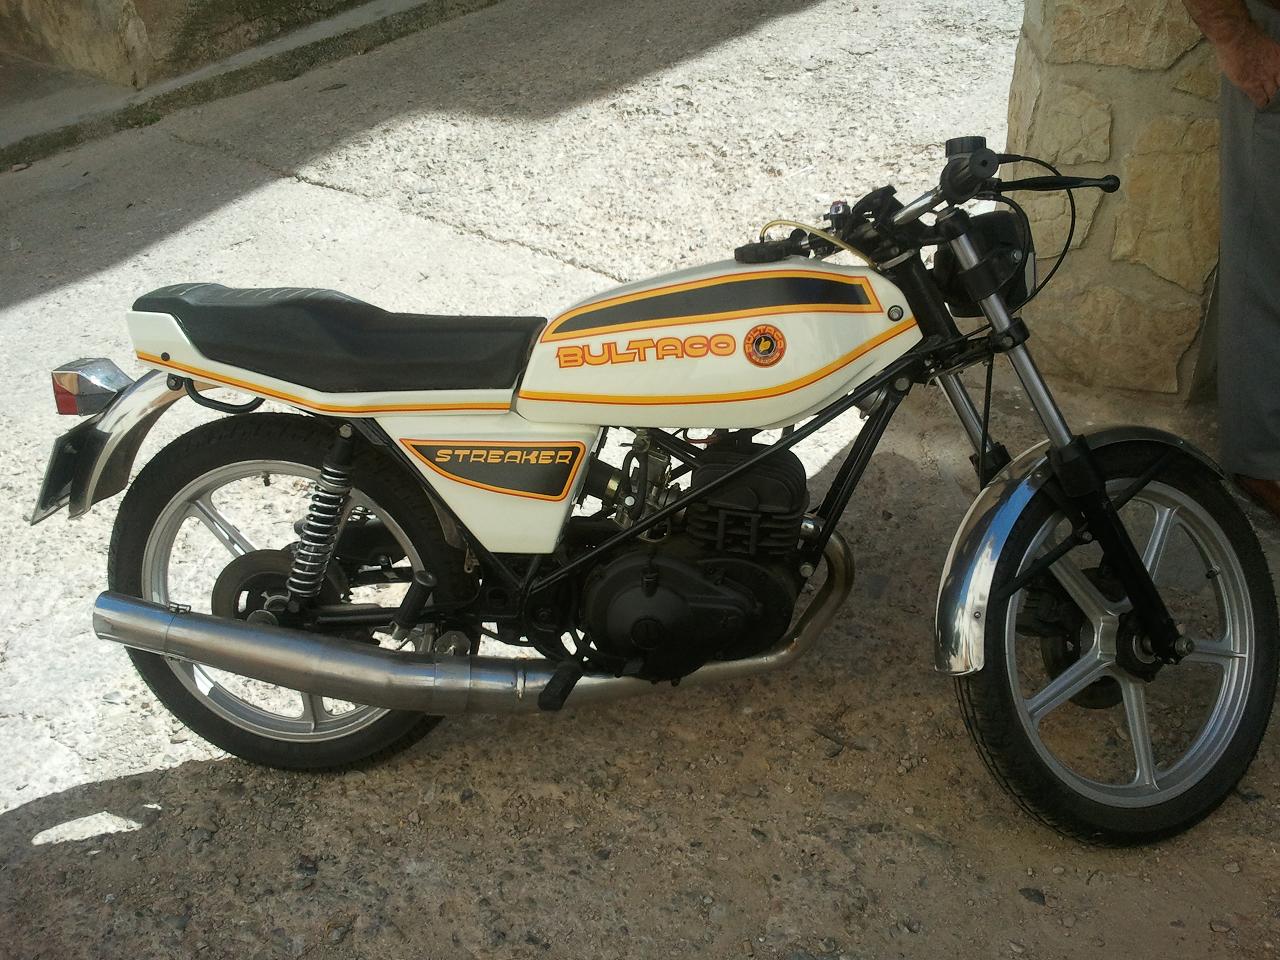 Se vende moto clasica Bultaco streaker - ForoCoches